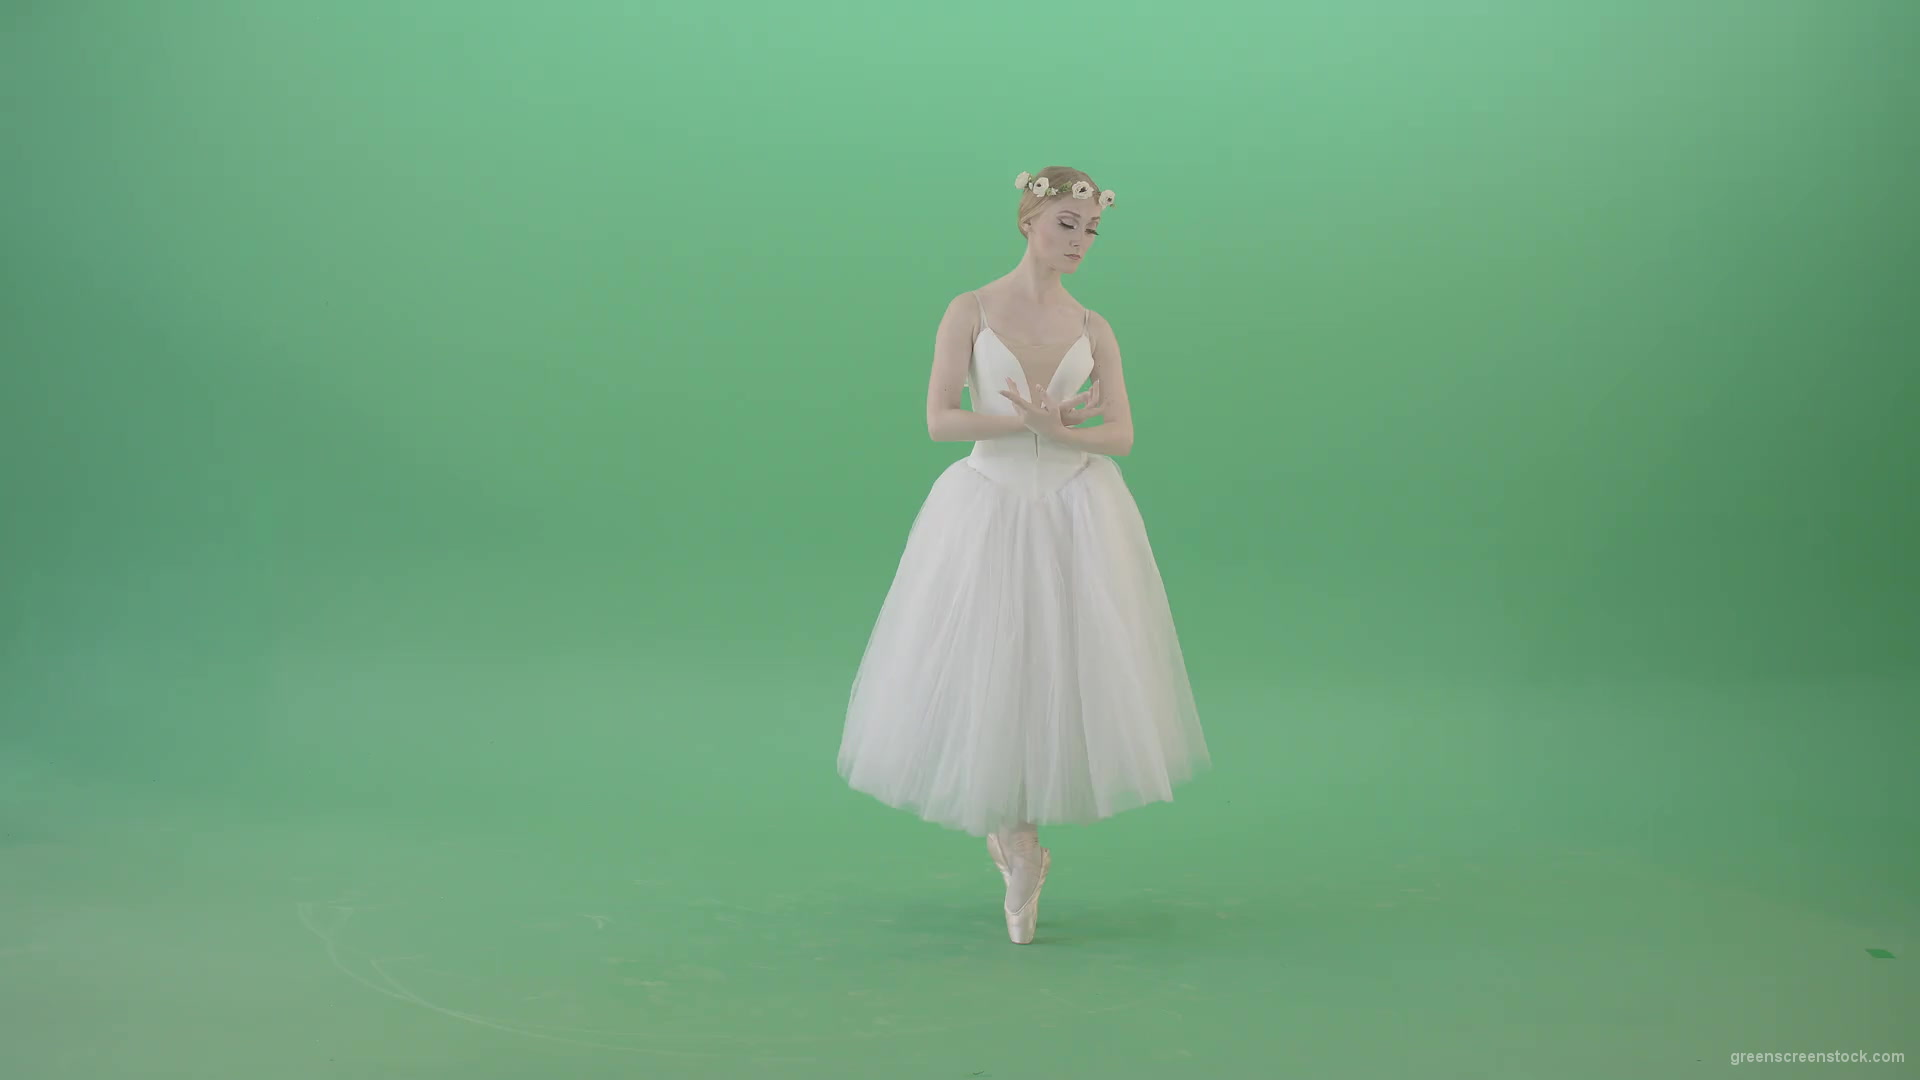 Beautiful-jumping-ballet-dancing-girl-choreograph-jumps-on-green-screen-4K-Video-Footage-1920_001 Green Screen Stock